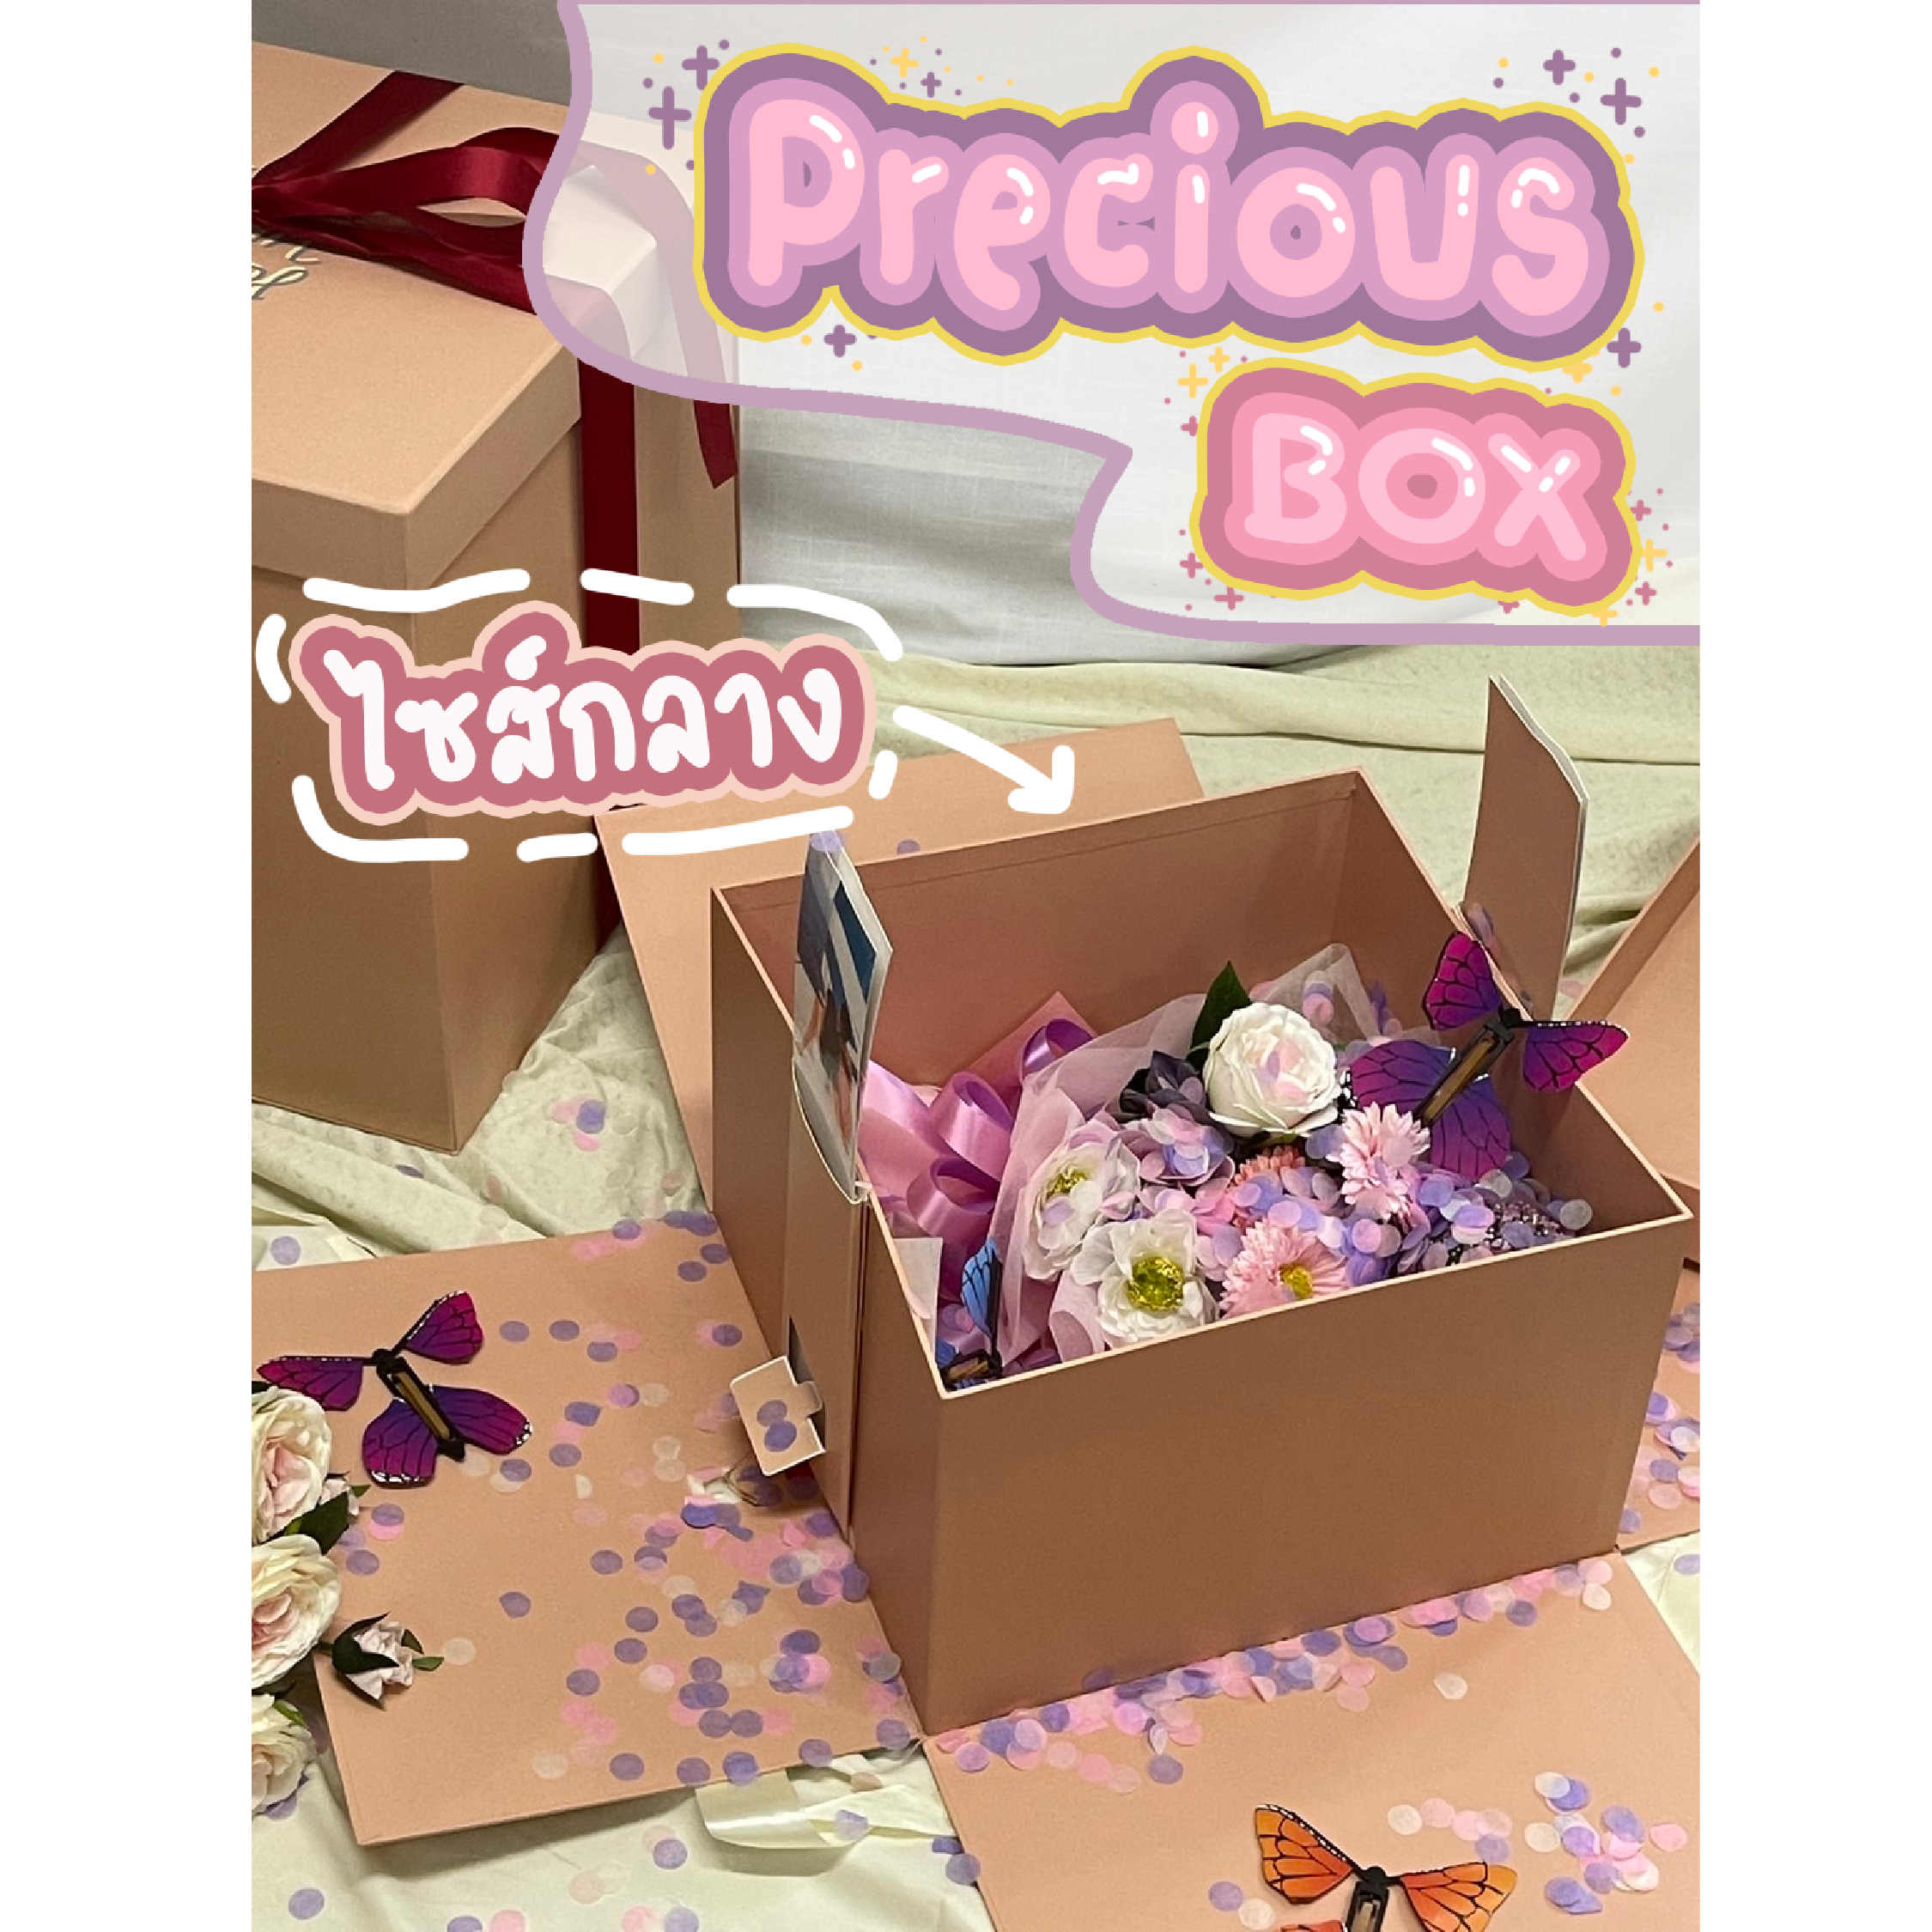 Precious Box